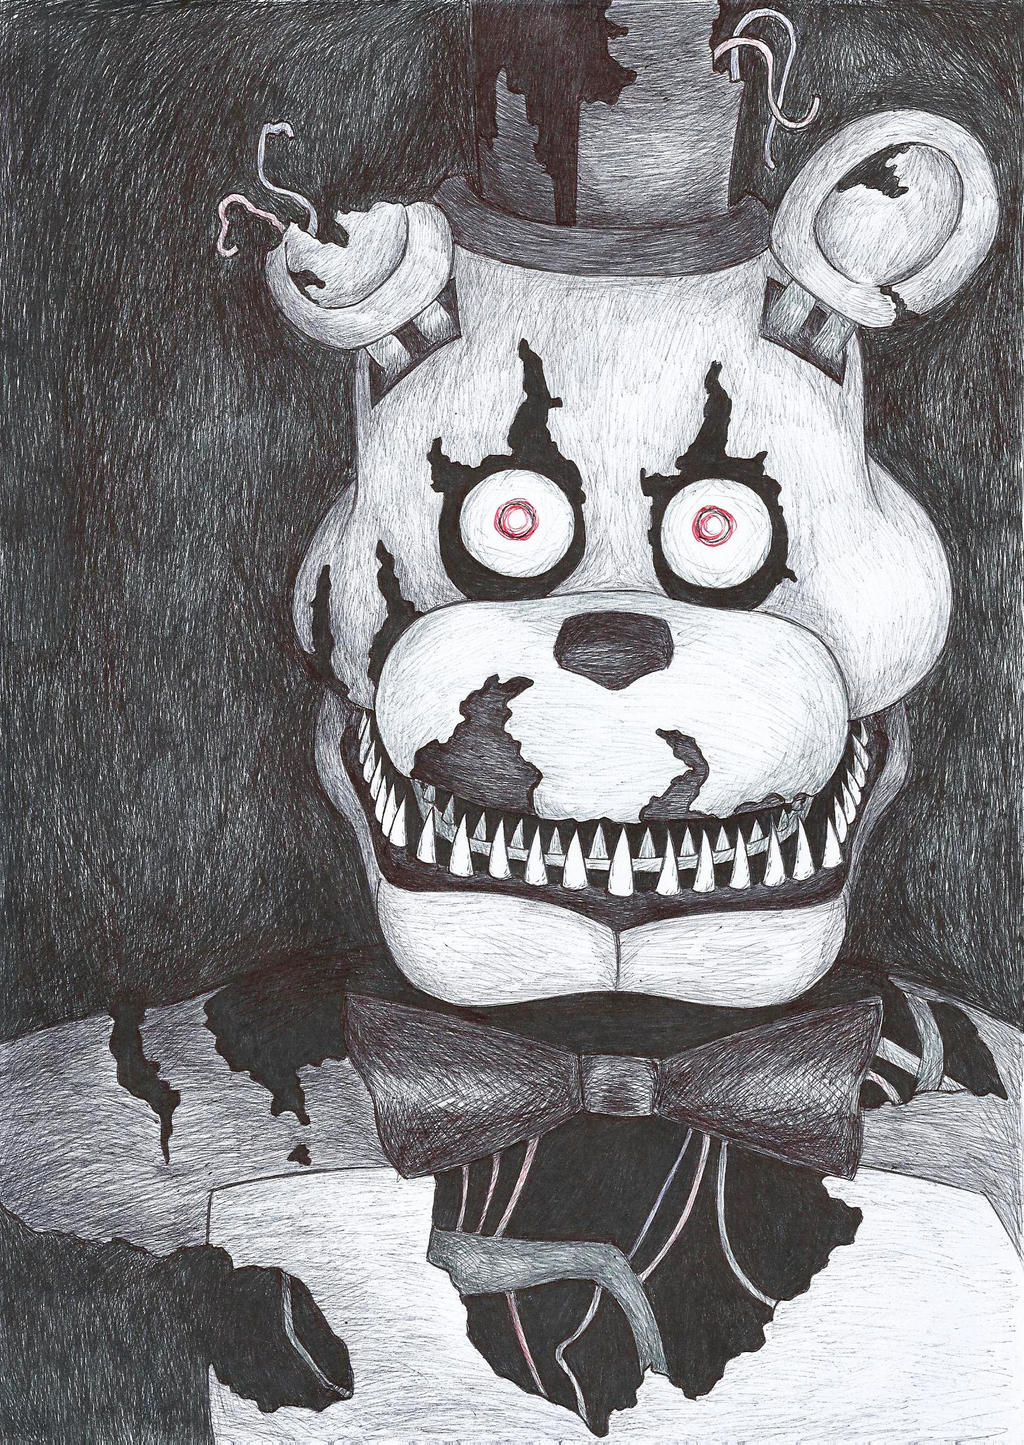 Nightmare Puppet by michaelnava715 on DeviantArt